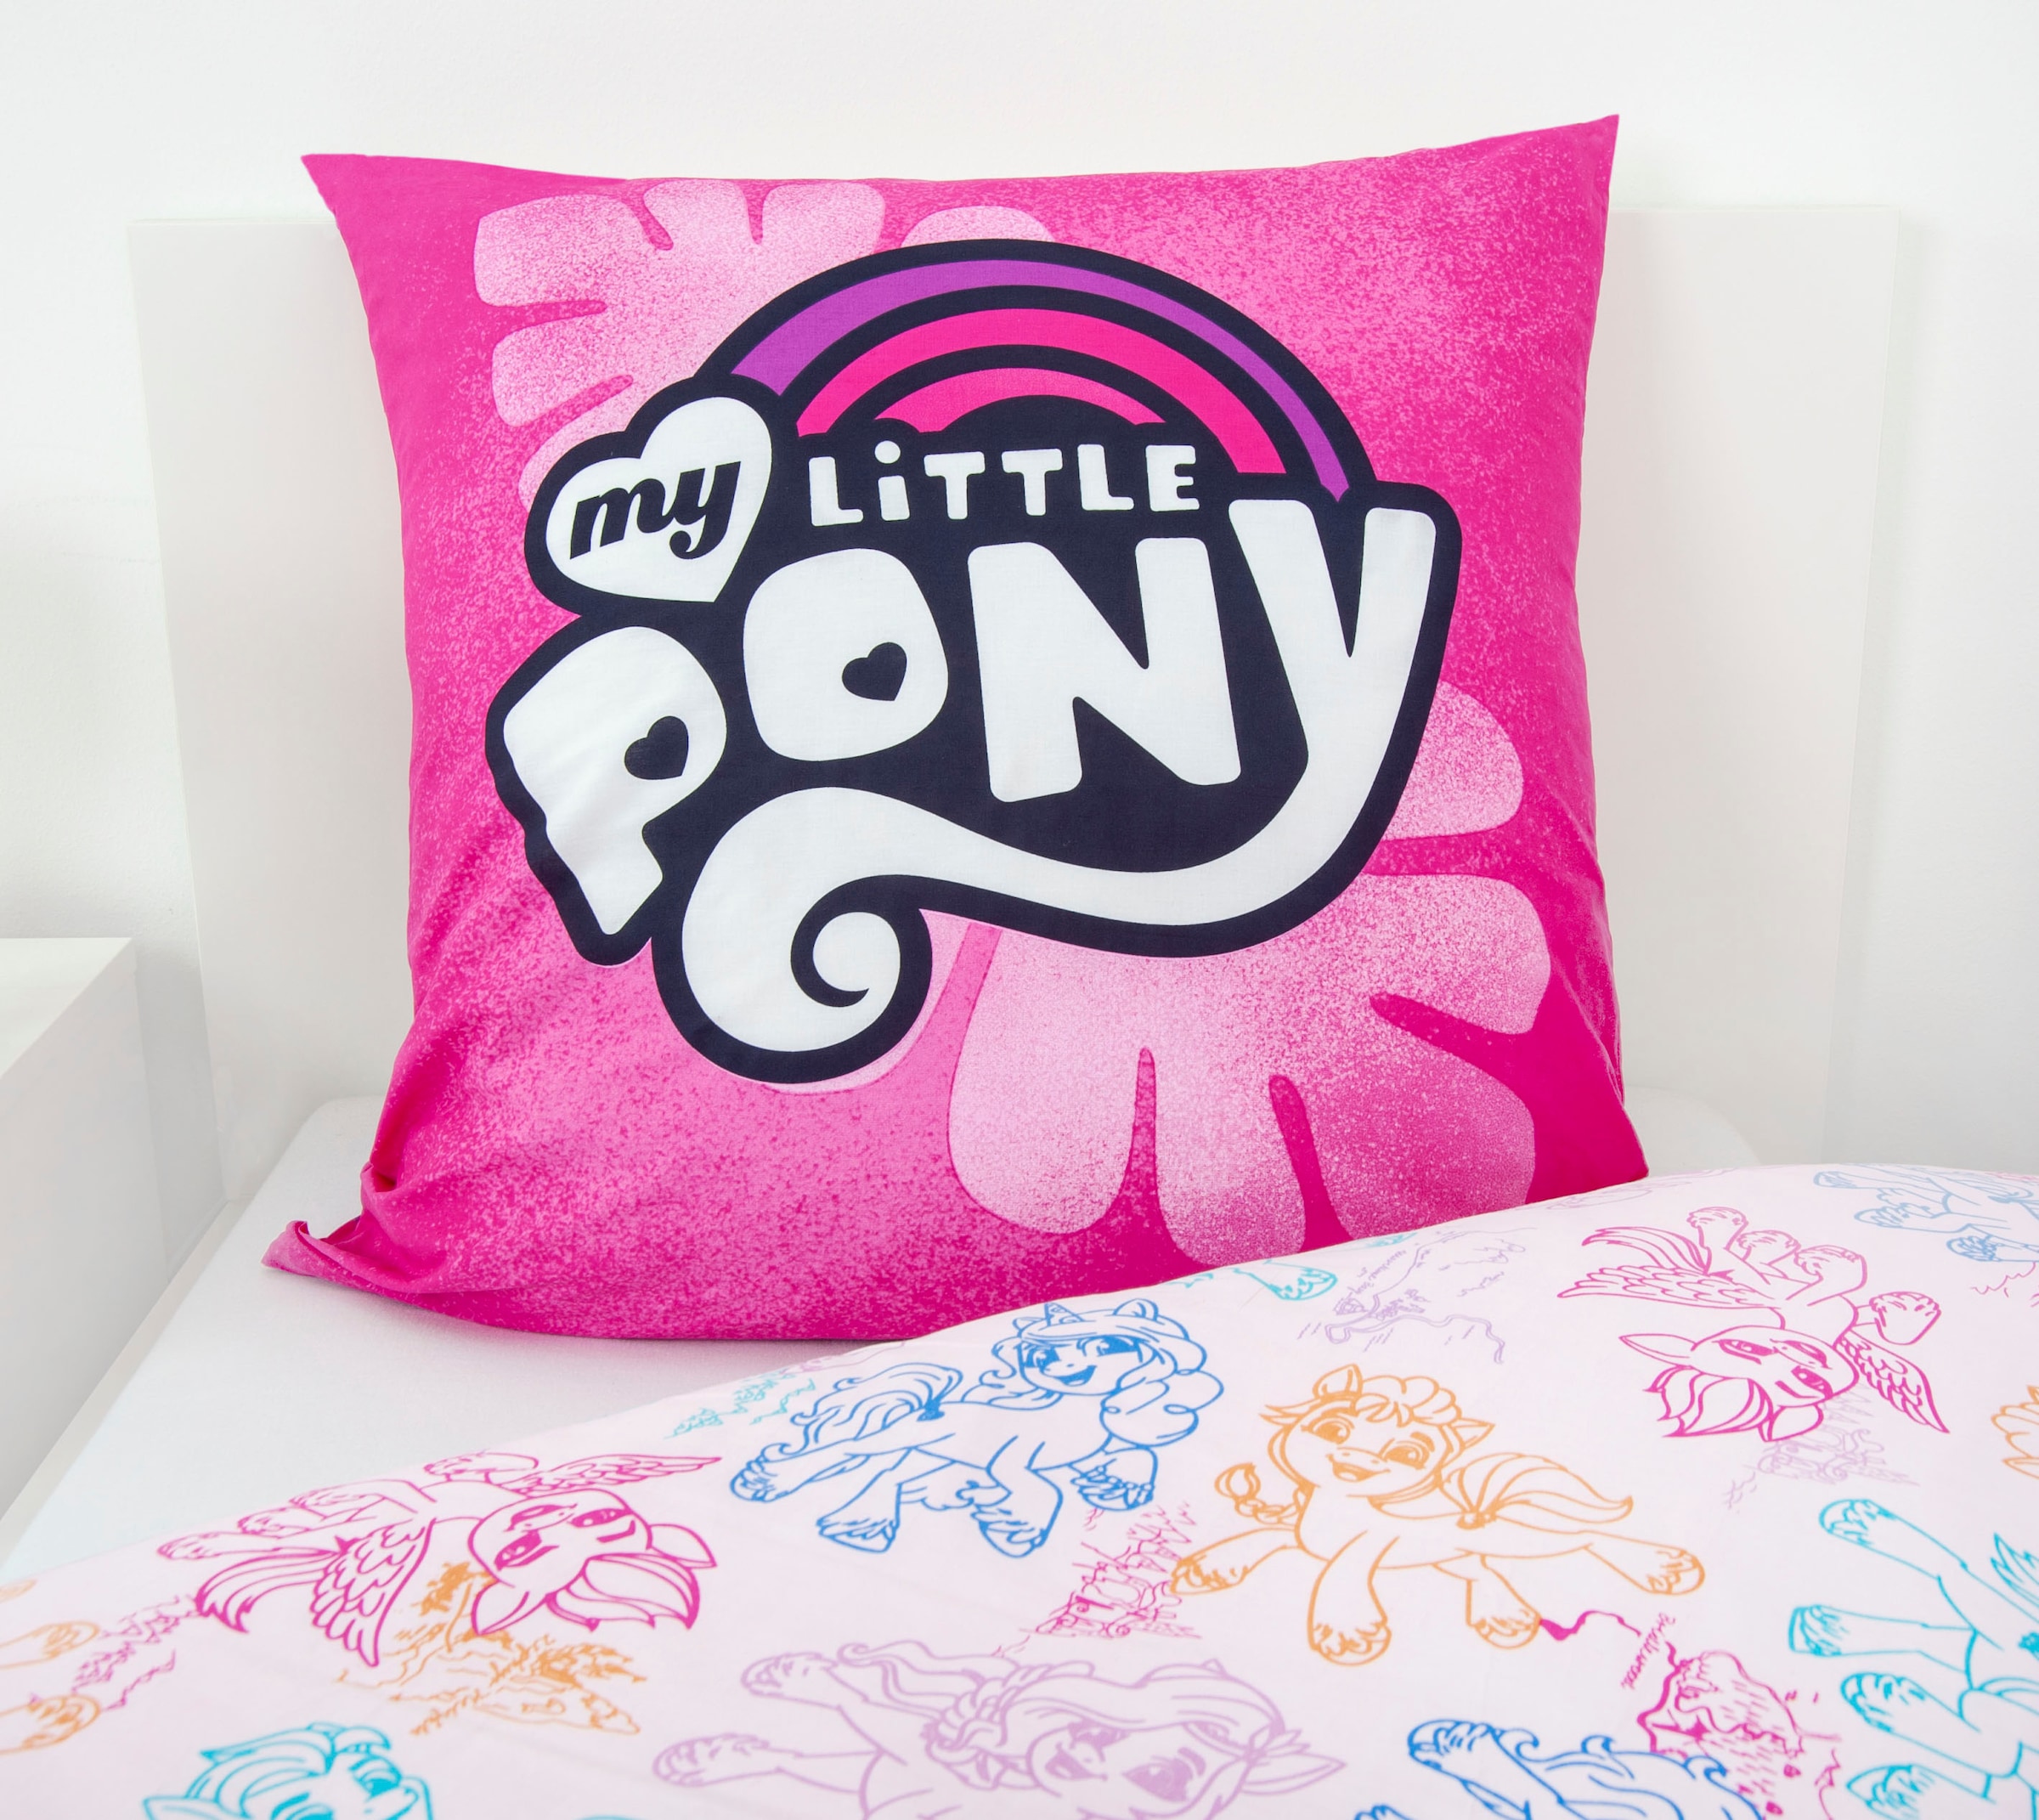 My Little Pony Kinderbettwäsche »My little pony«, mit tollem My little pony Motiv